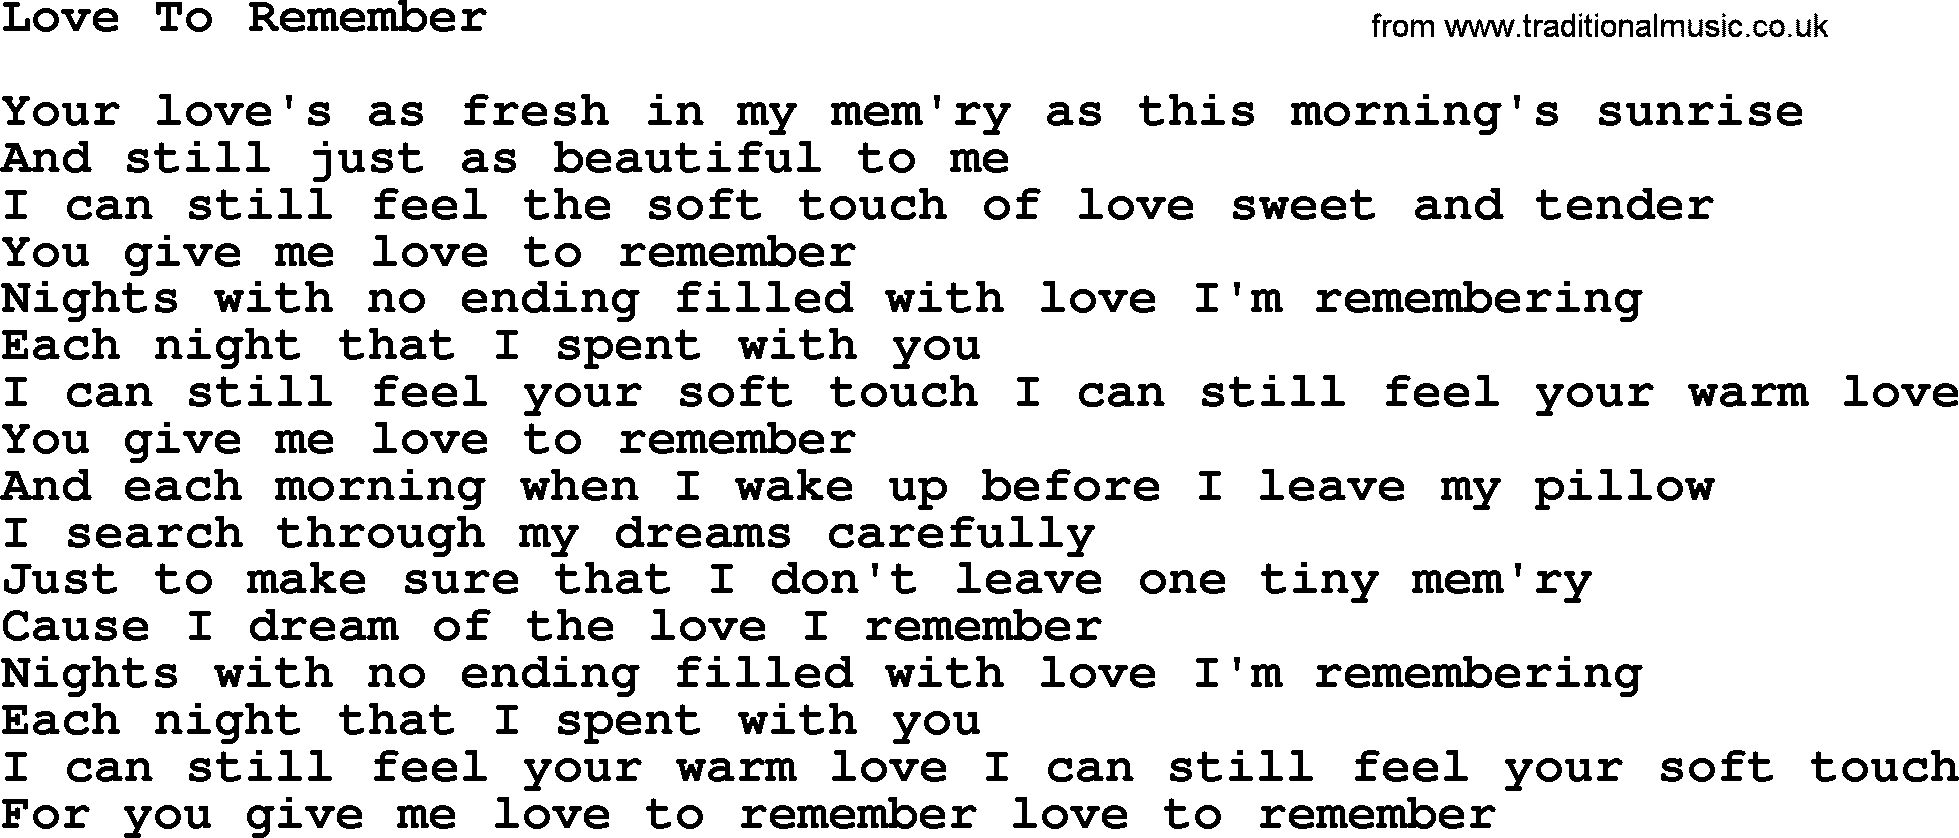 Dolly Parton song Love To Remember.txt lyrics